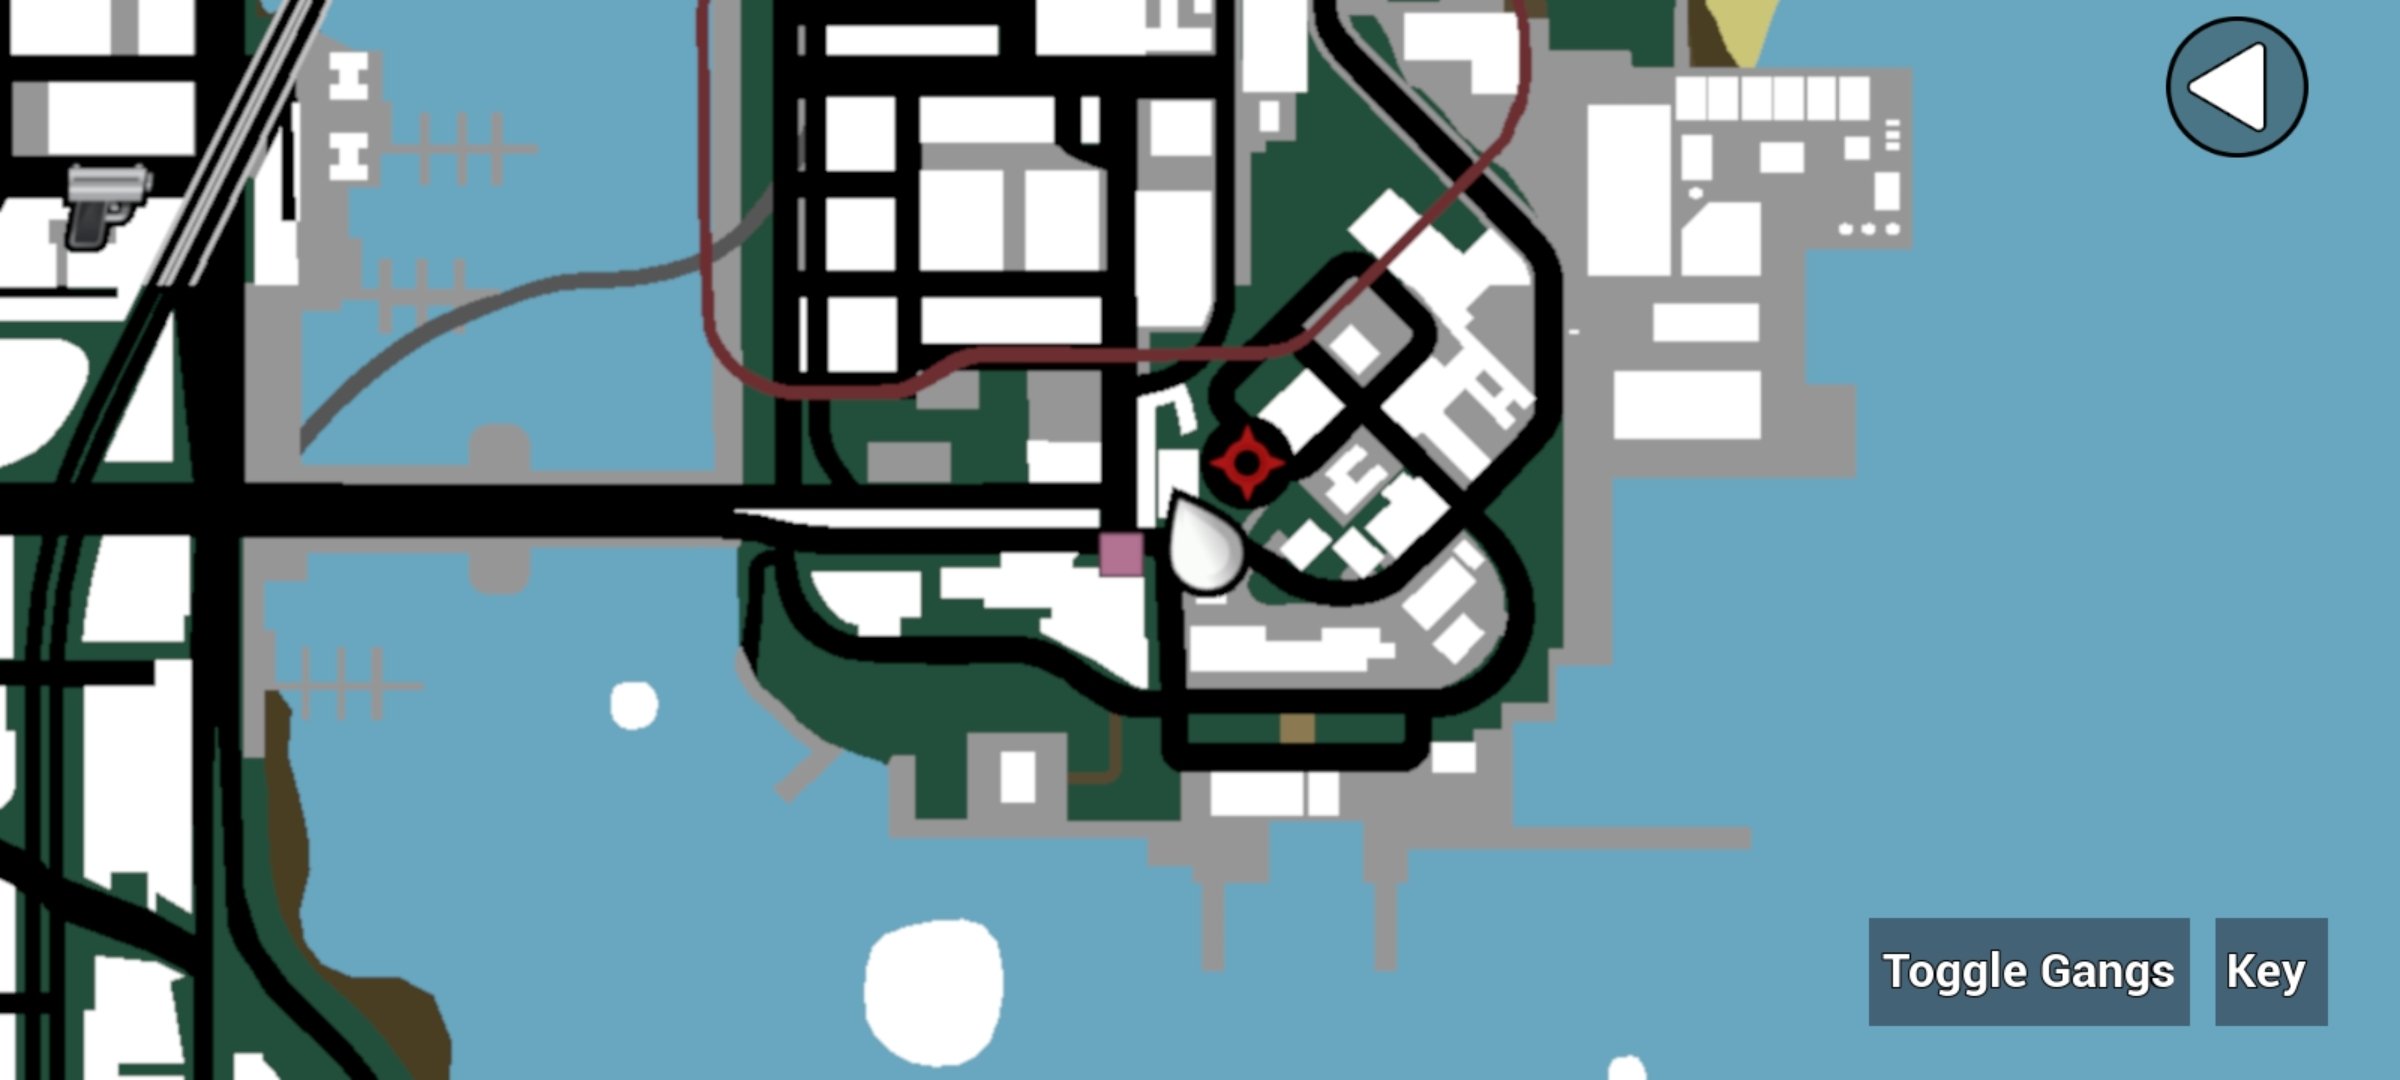 The GTA Place - GTA III Maps